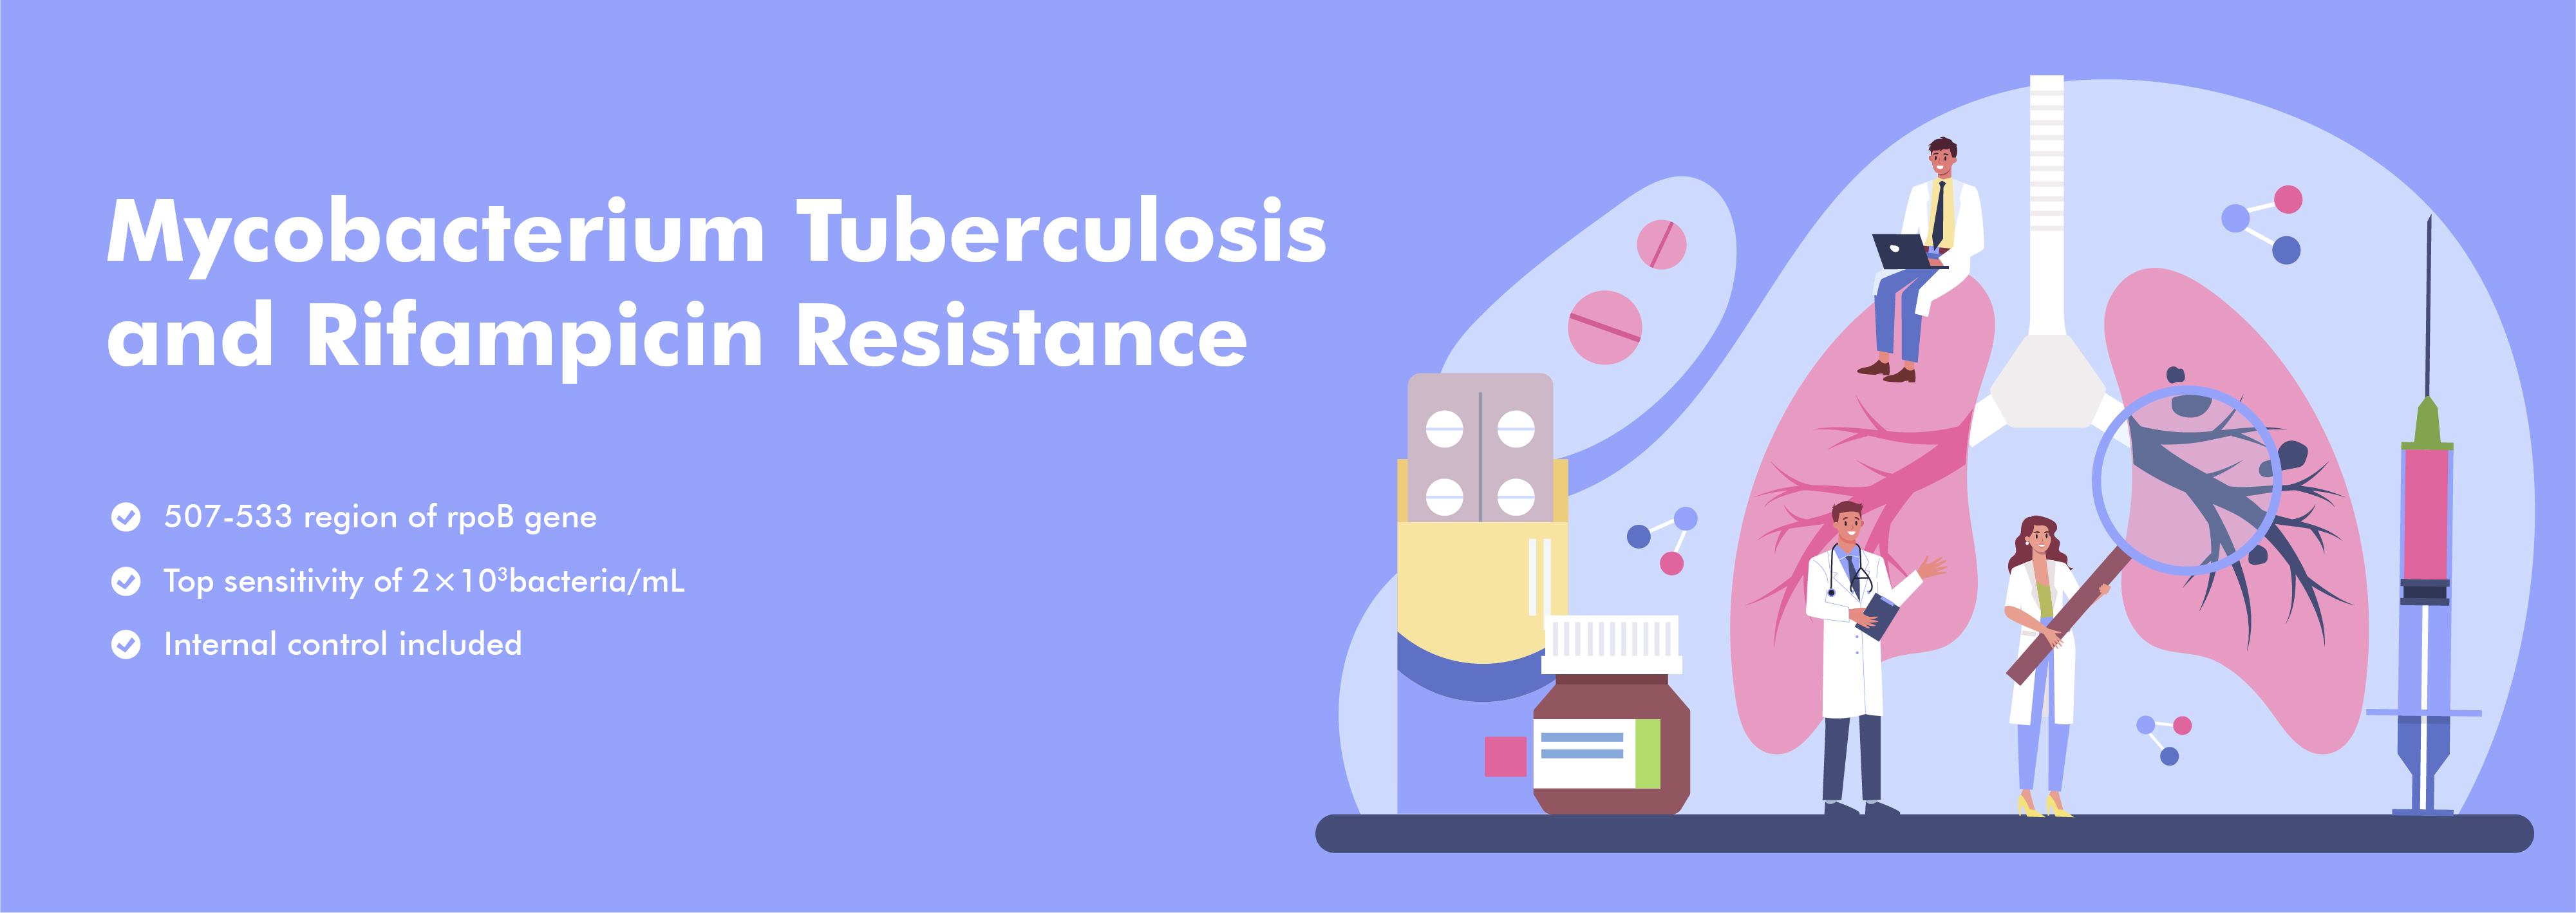 Mycobacterium Tuberculosis Acid Nucleic agus Rifampicin Resistance